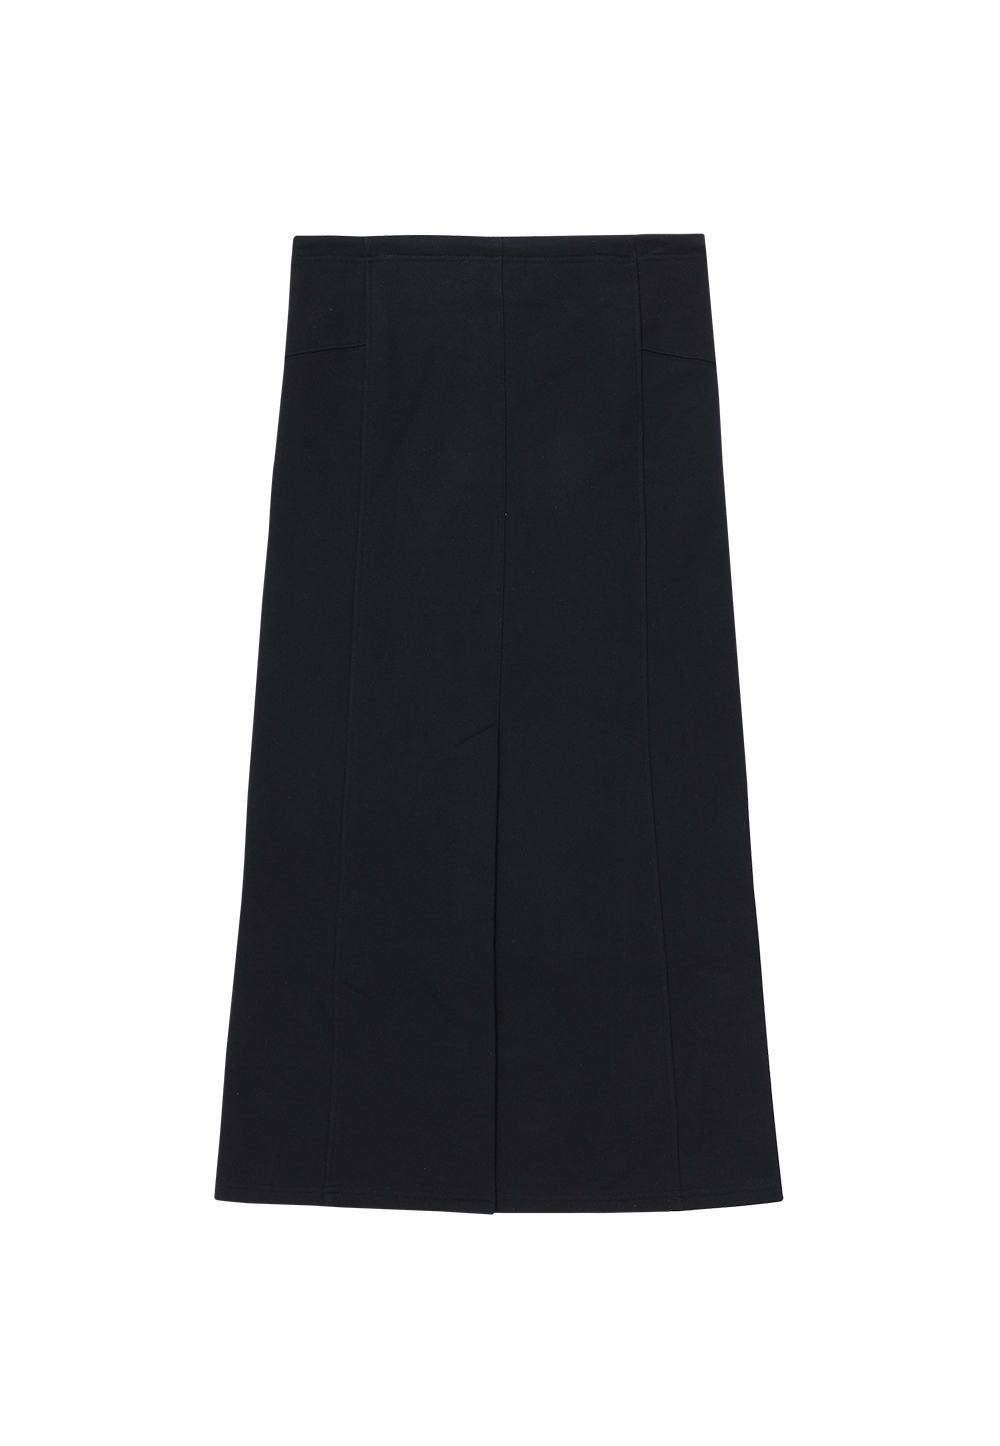 Signature slim long skirt - BLACK